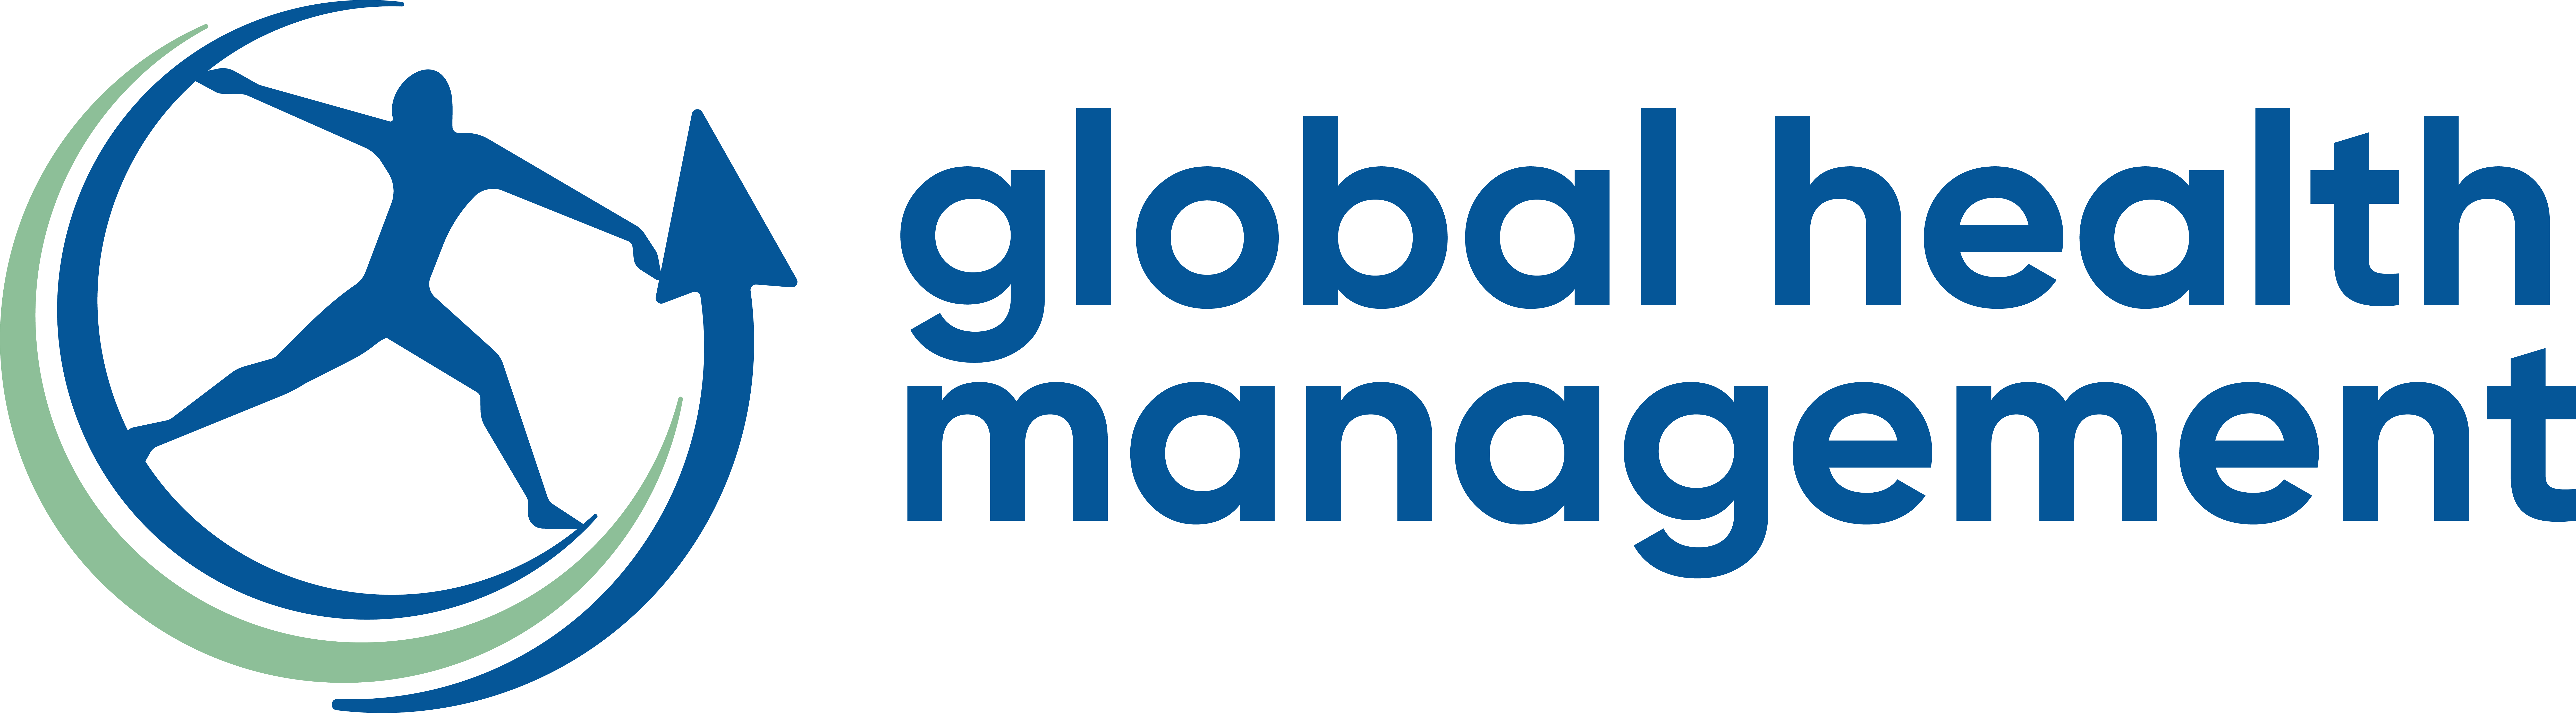 Global Health Management Logo